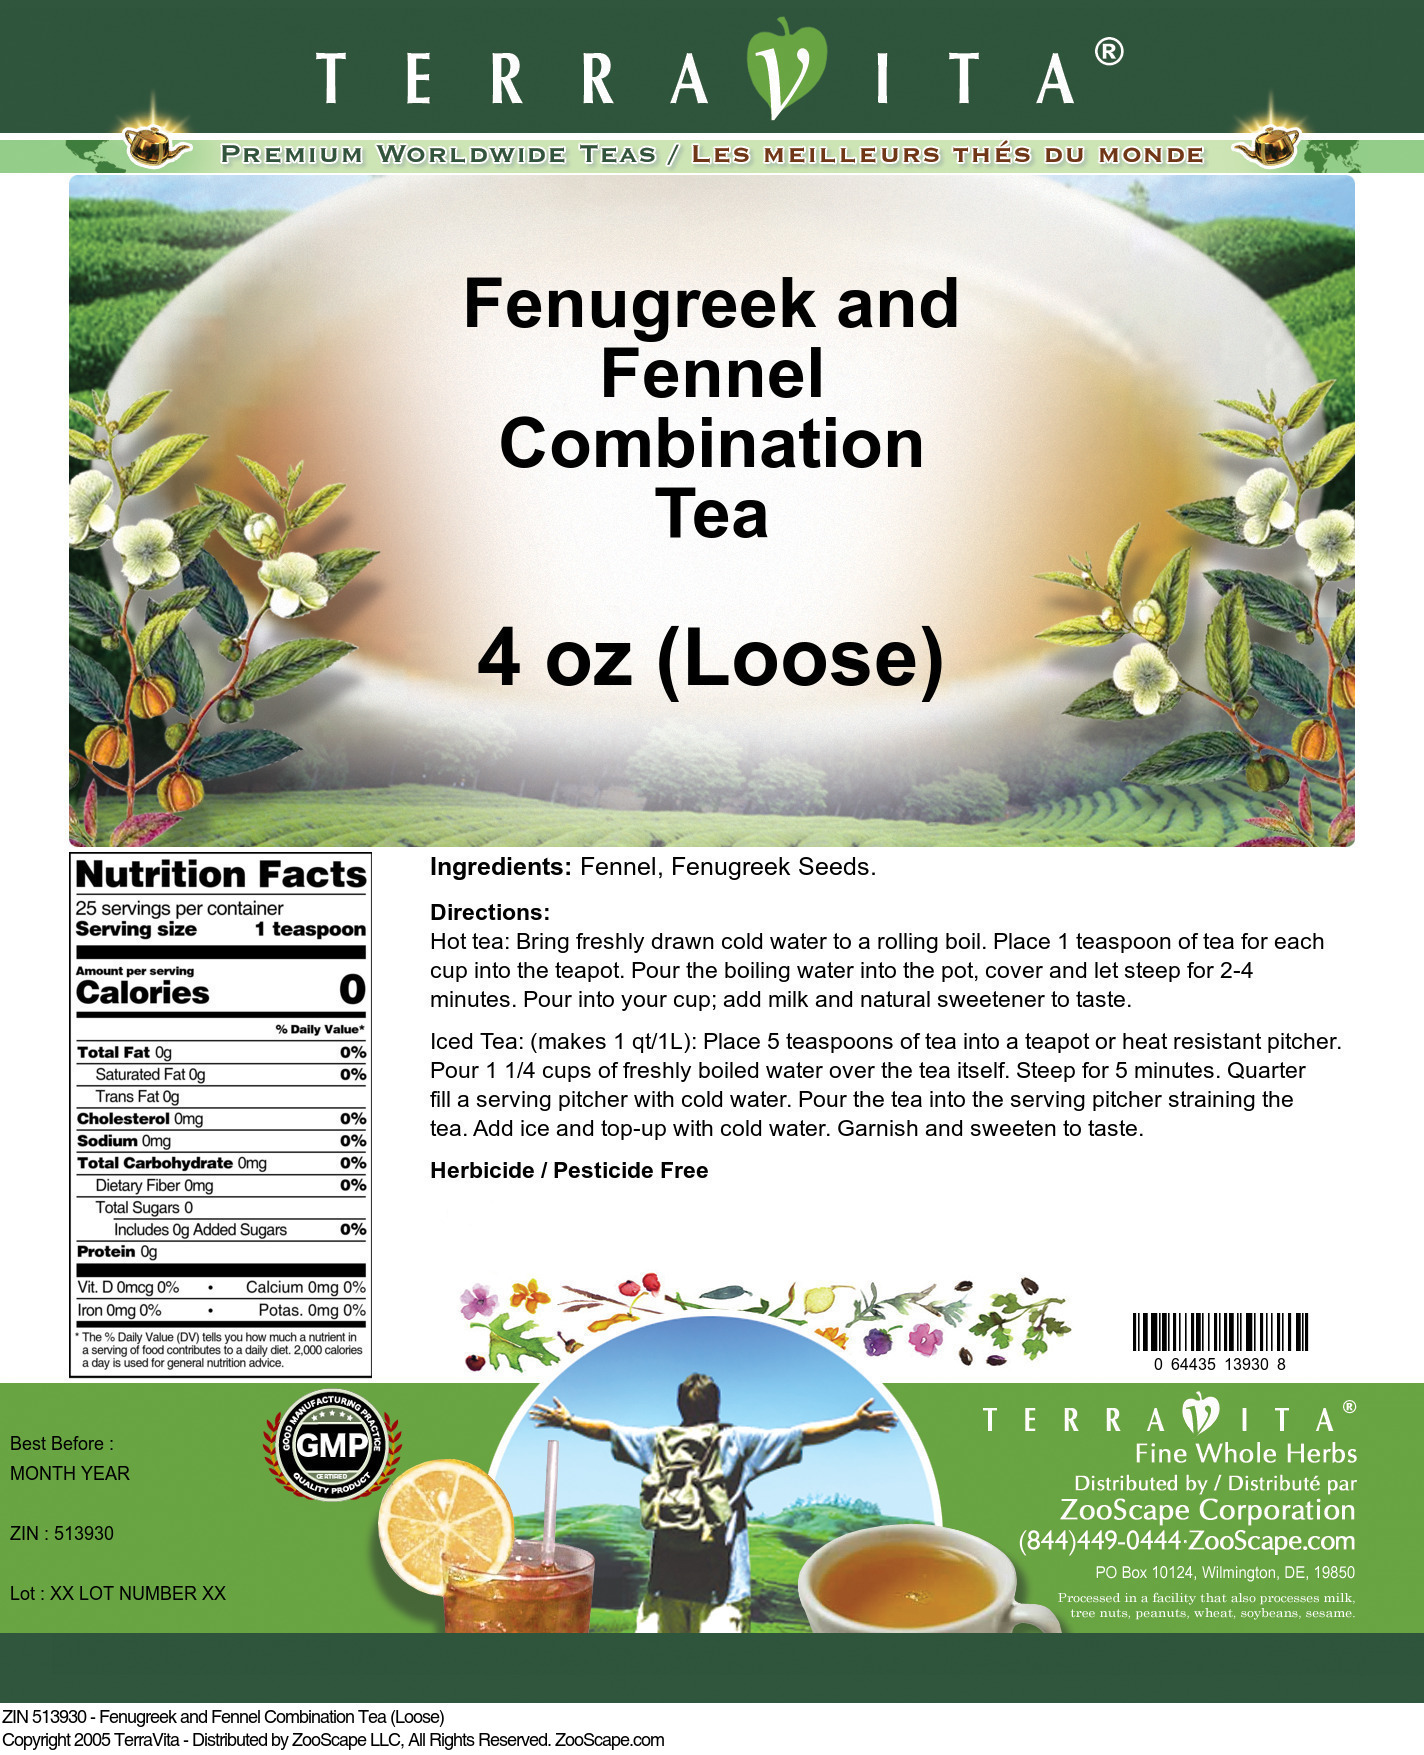 Fenugreek and Fennel Combination Tea (Loose) - Label